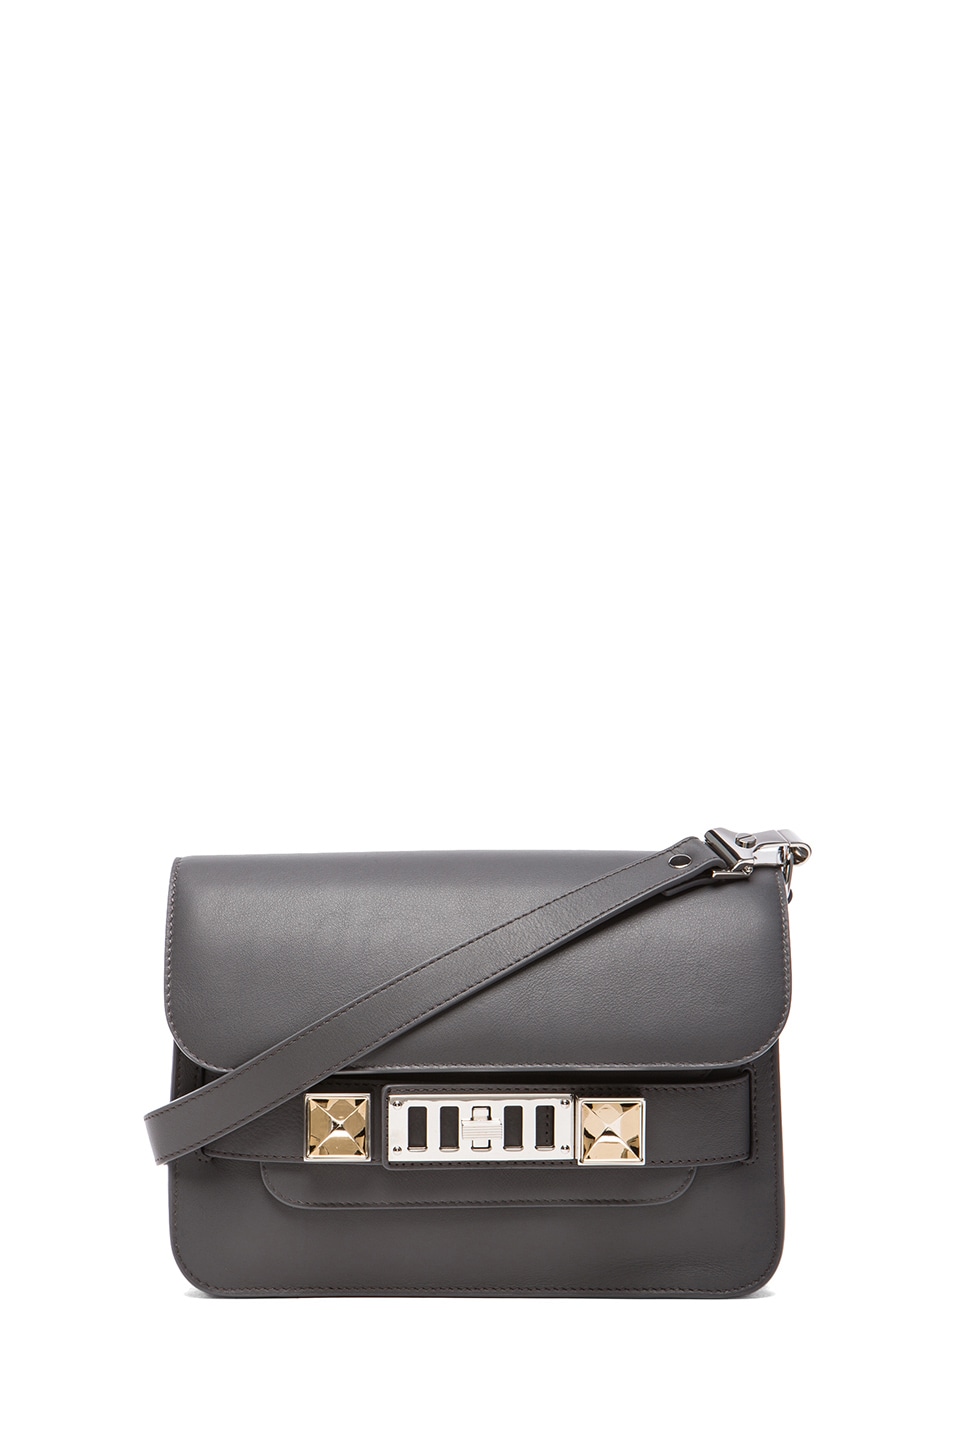 Image 1 of Proenza Schouler Mini PS11 Classic Bag in Heather Grey